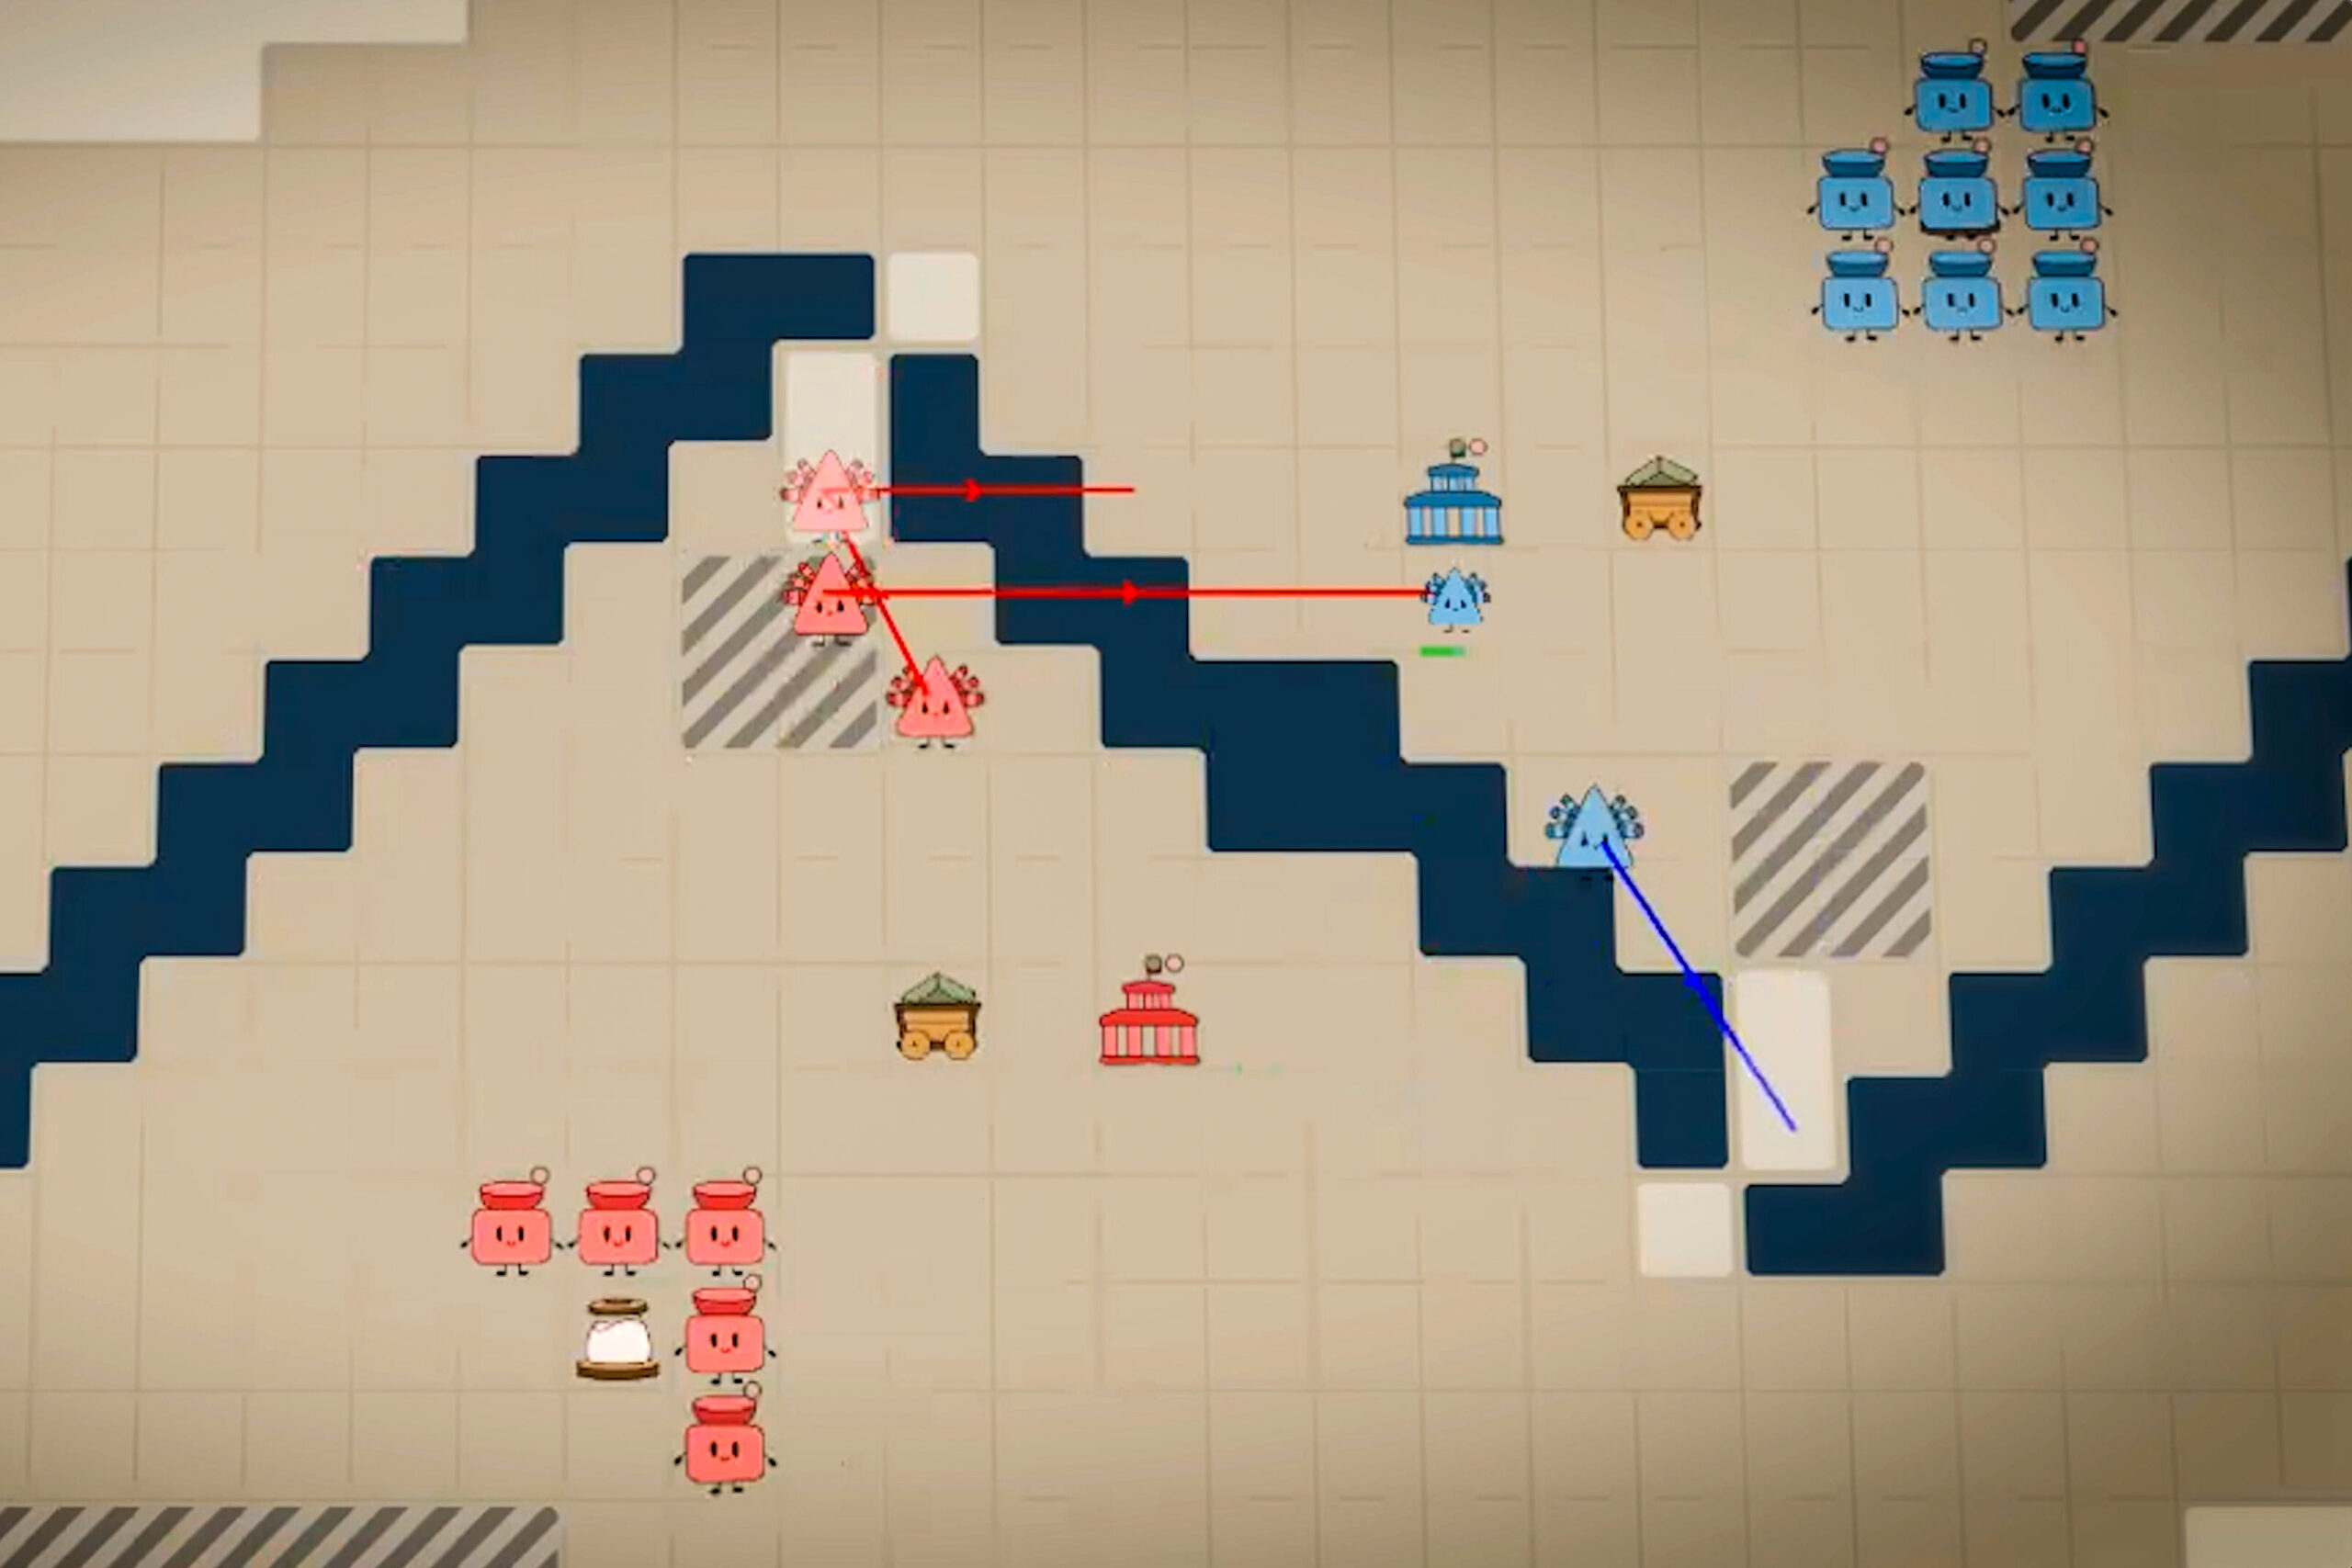 Robot armies duke it out in Battlecode’s epic on-screen battles